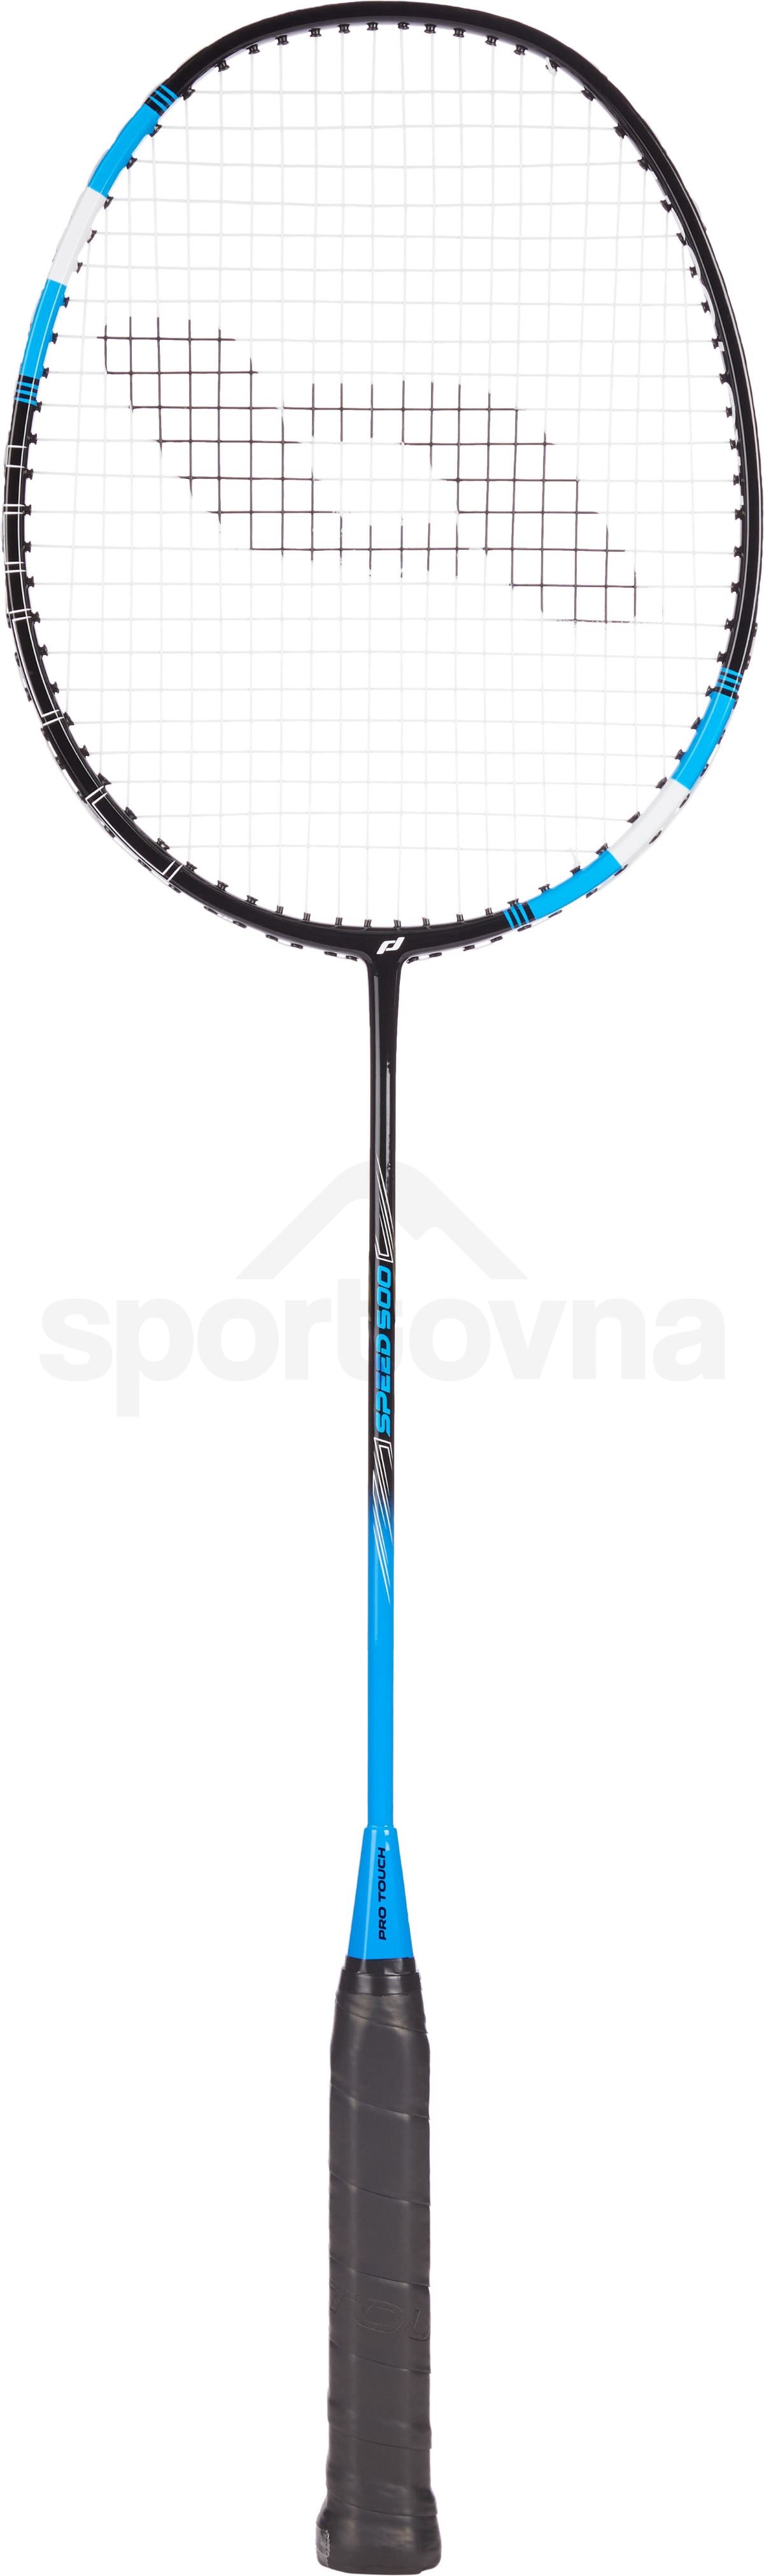 Badmintonová raketa Pro Touch SPEED 500 - černá/modrá